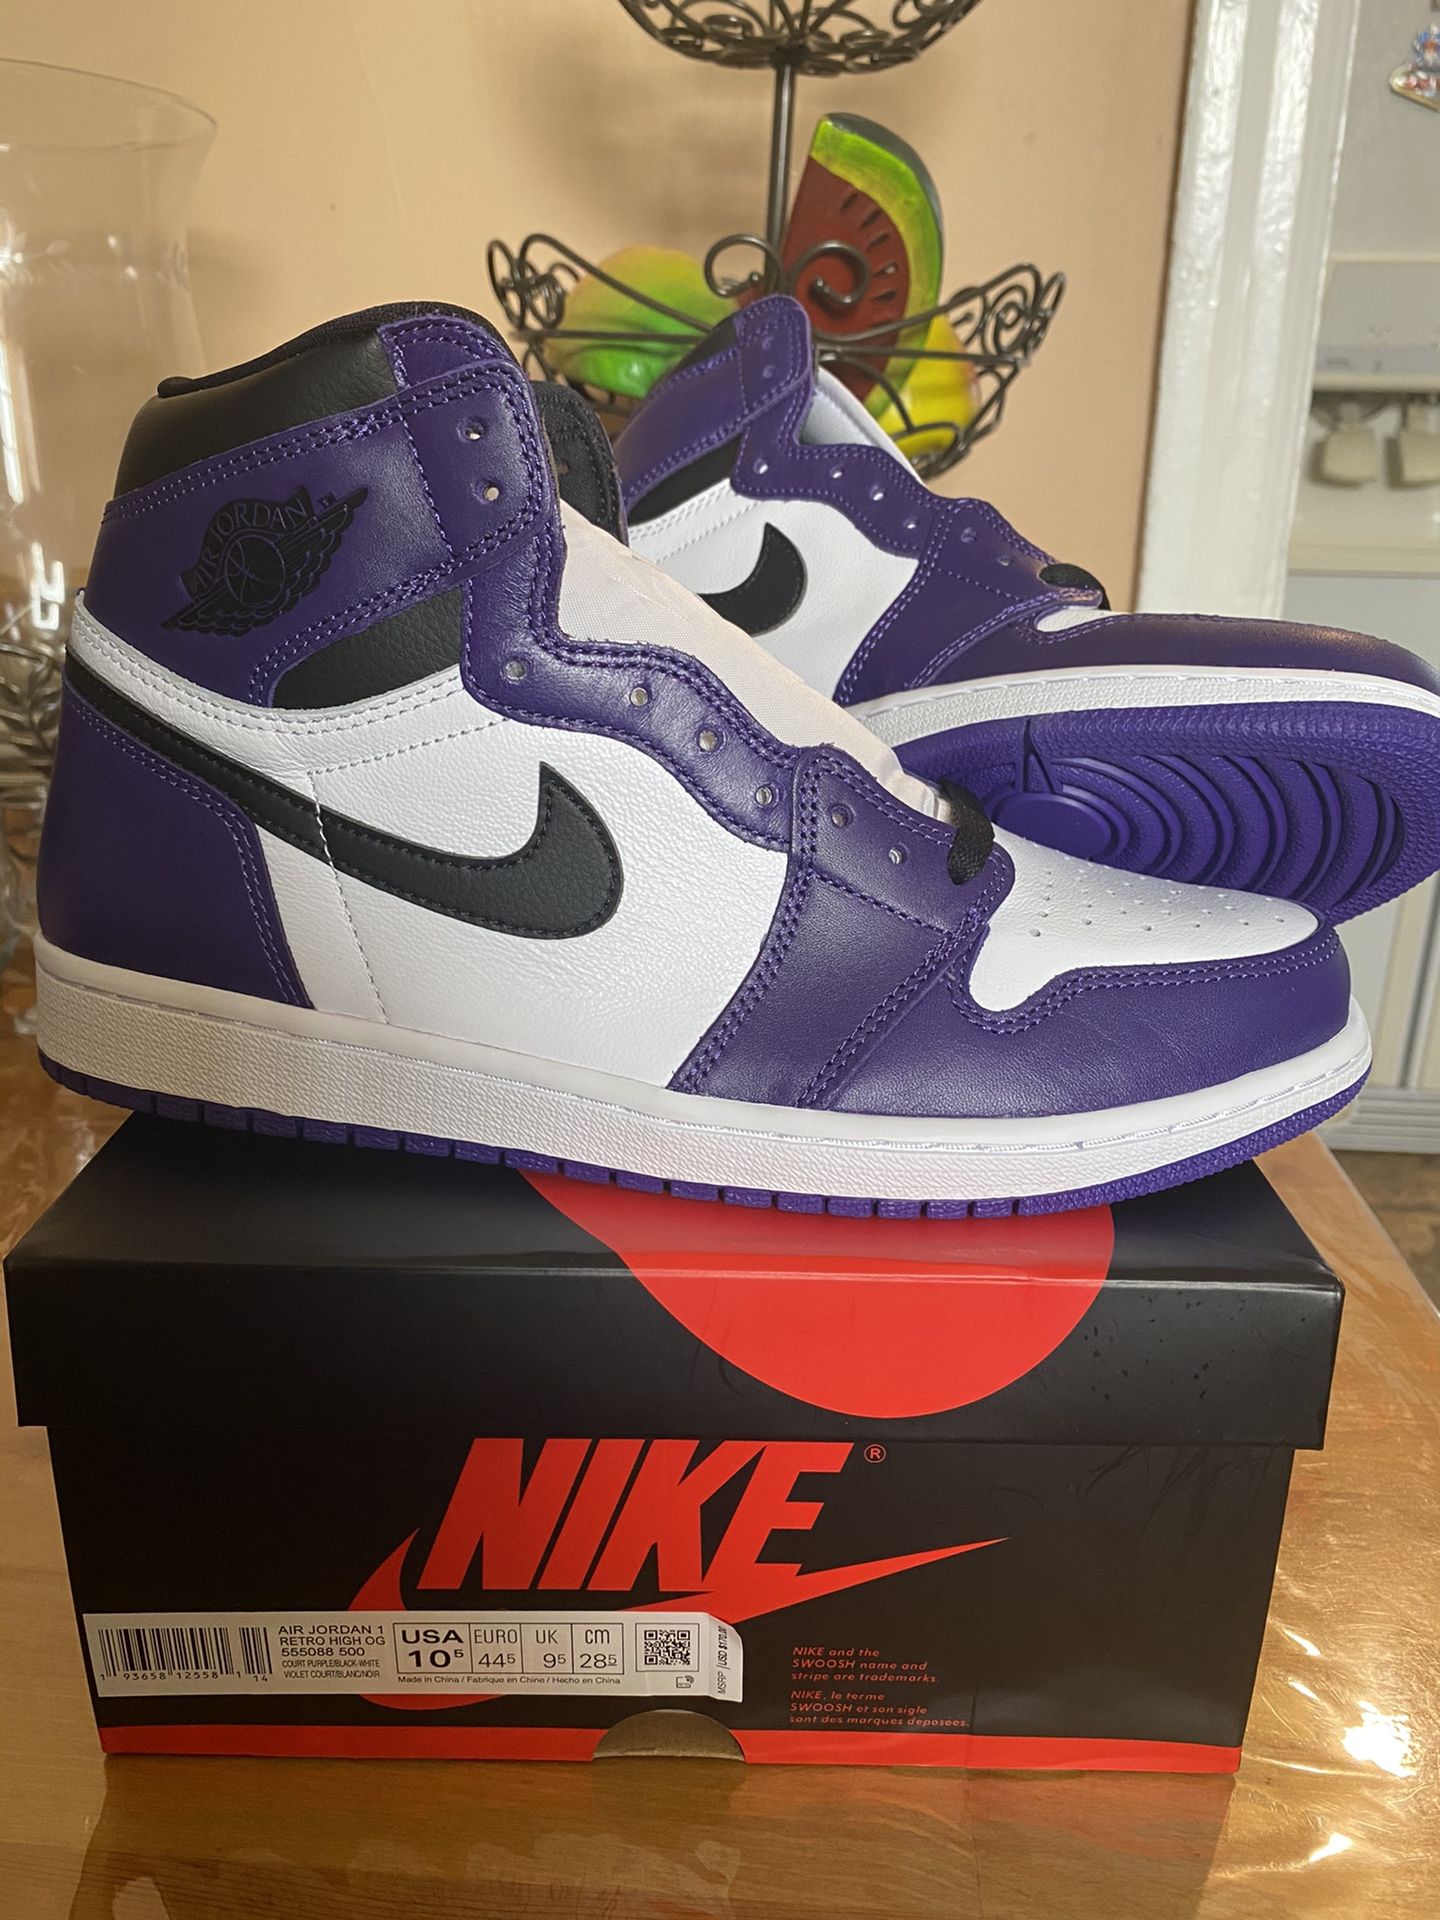 Air Jordan 1 Court Purple size 10.5